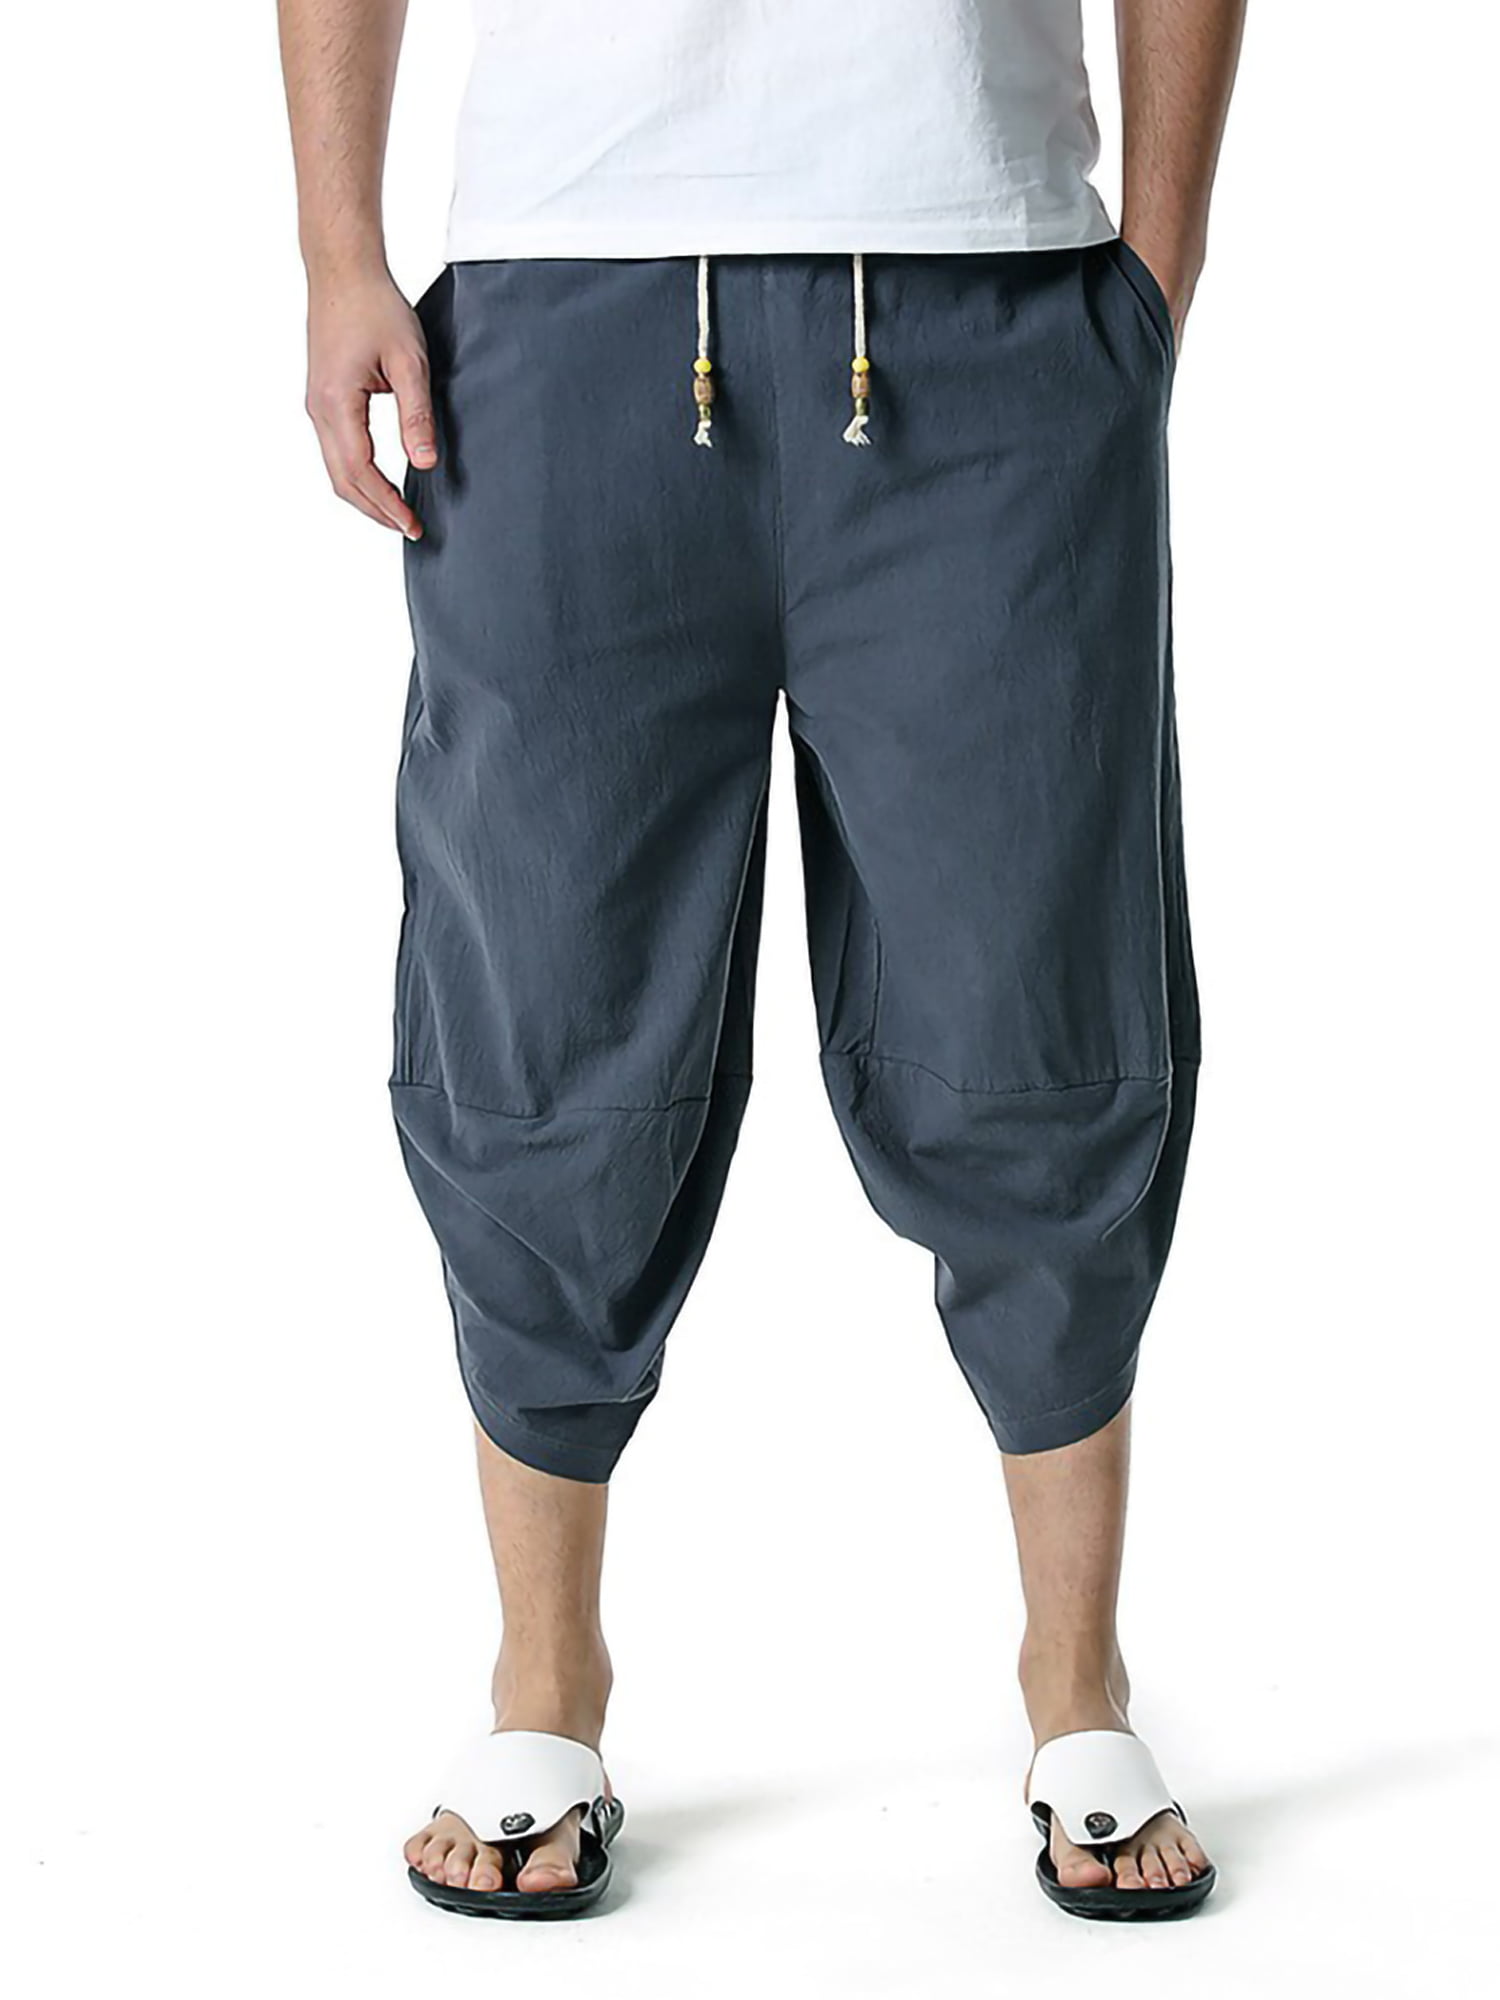 Mens Casual Shorts Linen Yoga 3/4 Capri Pants Elastic Waist Gym Sports Hiking Baggy Shorts Pants with Pockets 